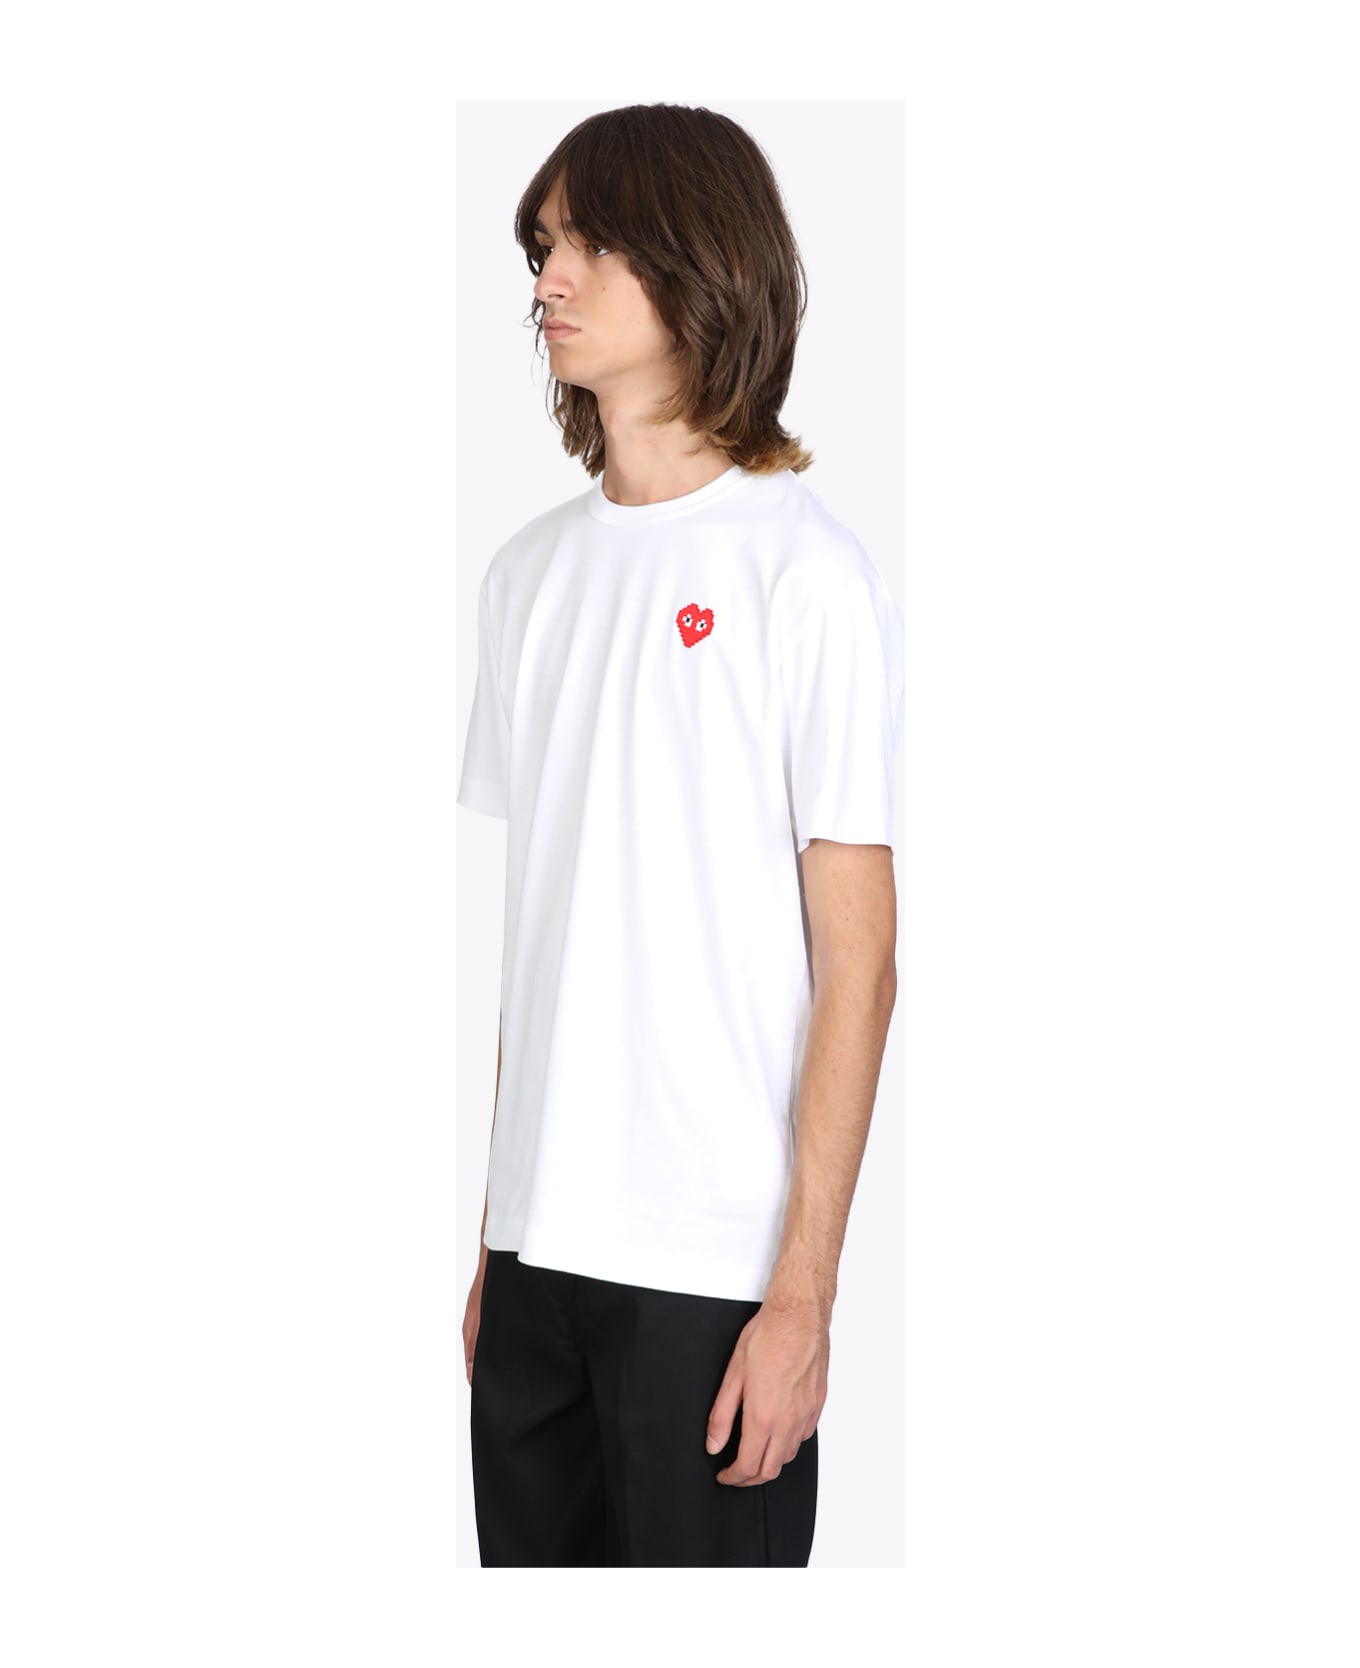 Comme des Garçons Shirt Boy Mens T-shirt Short Sleeve Knit White T-shirt With Pixel Heart Patch. - White